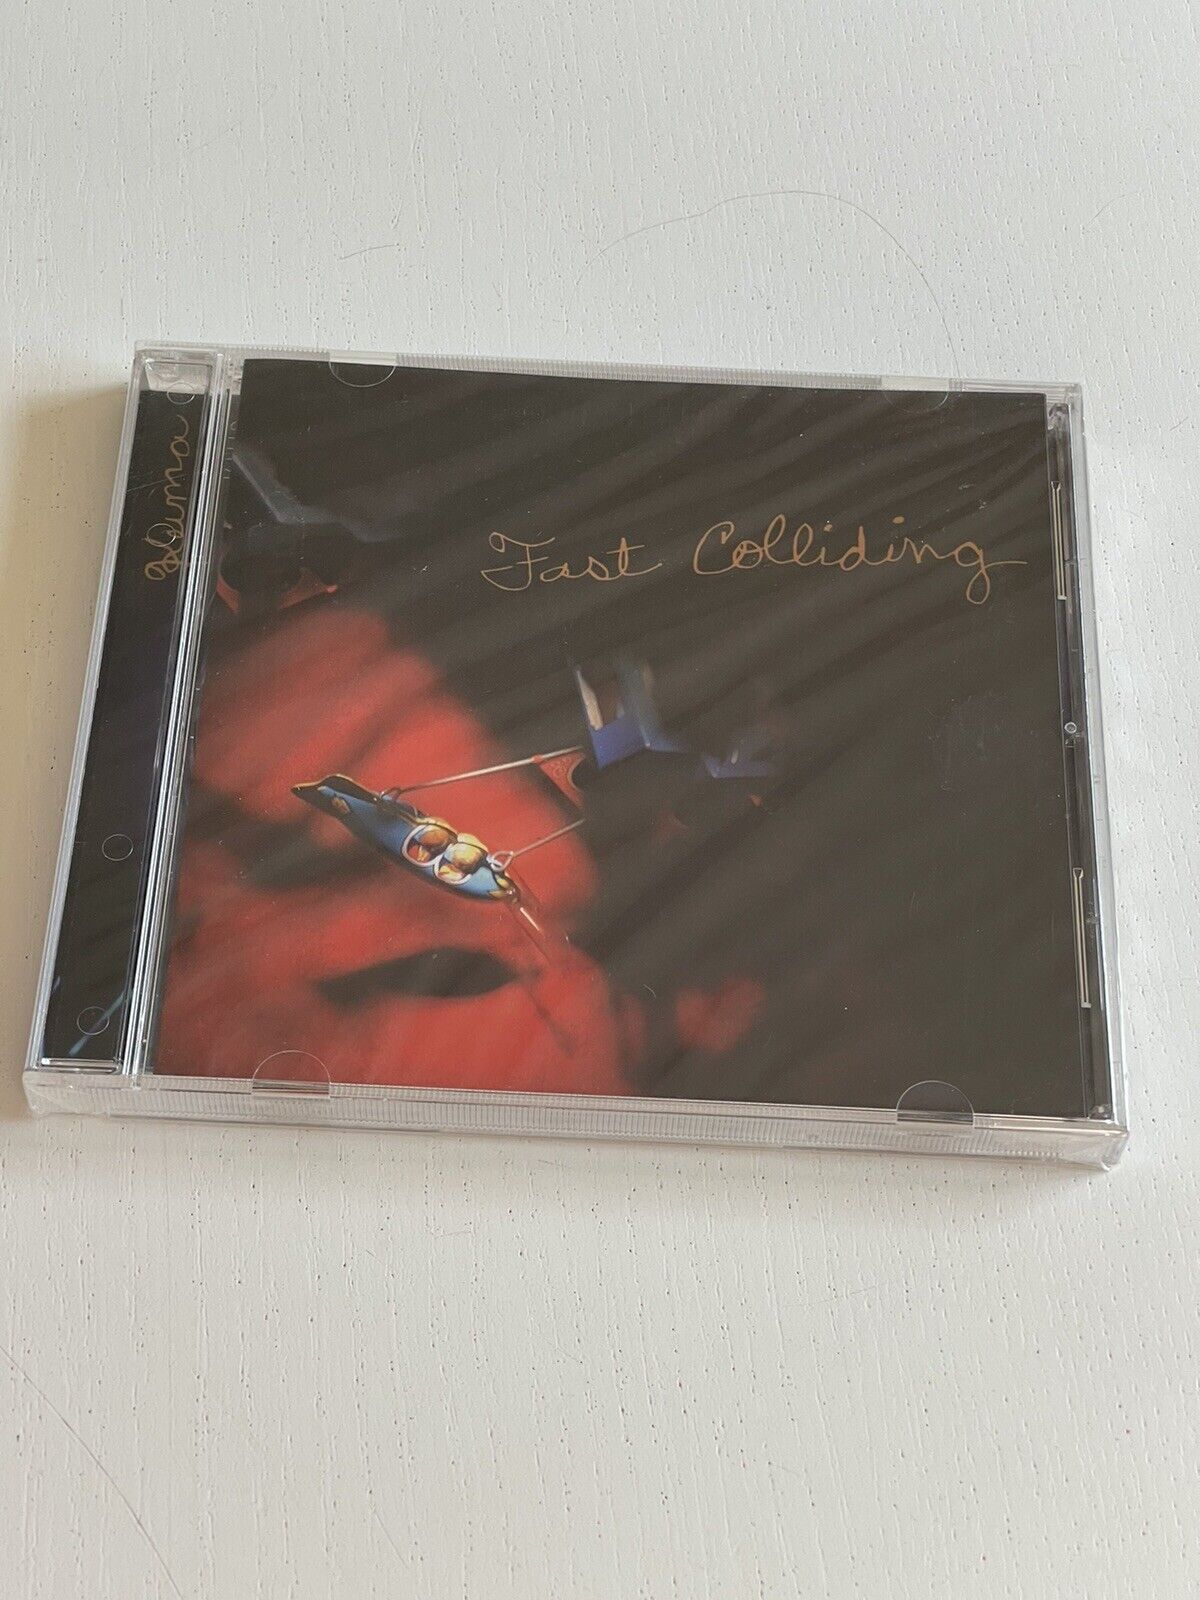 Rare New Sealed - Kumasound: Fast Colliding CD (2005)